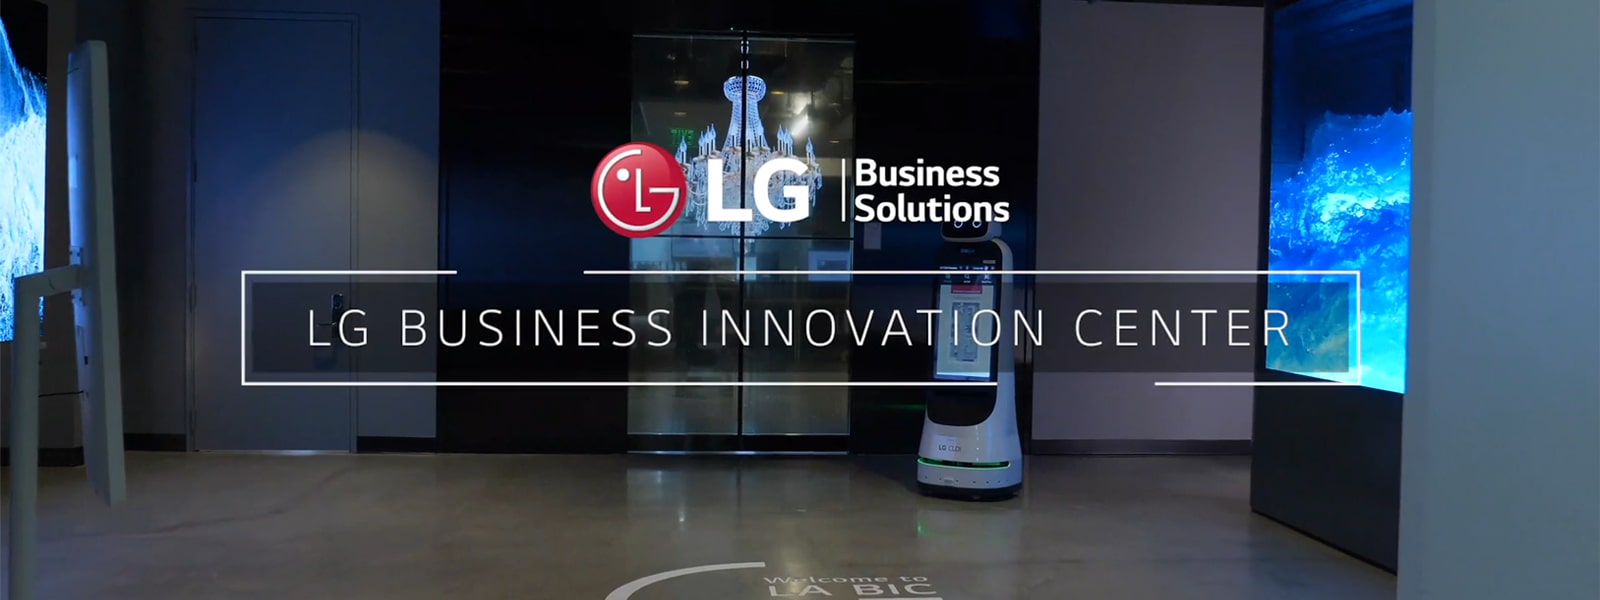 LG Business Innovation Center Los Angeles